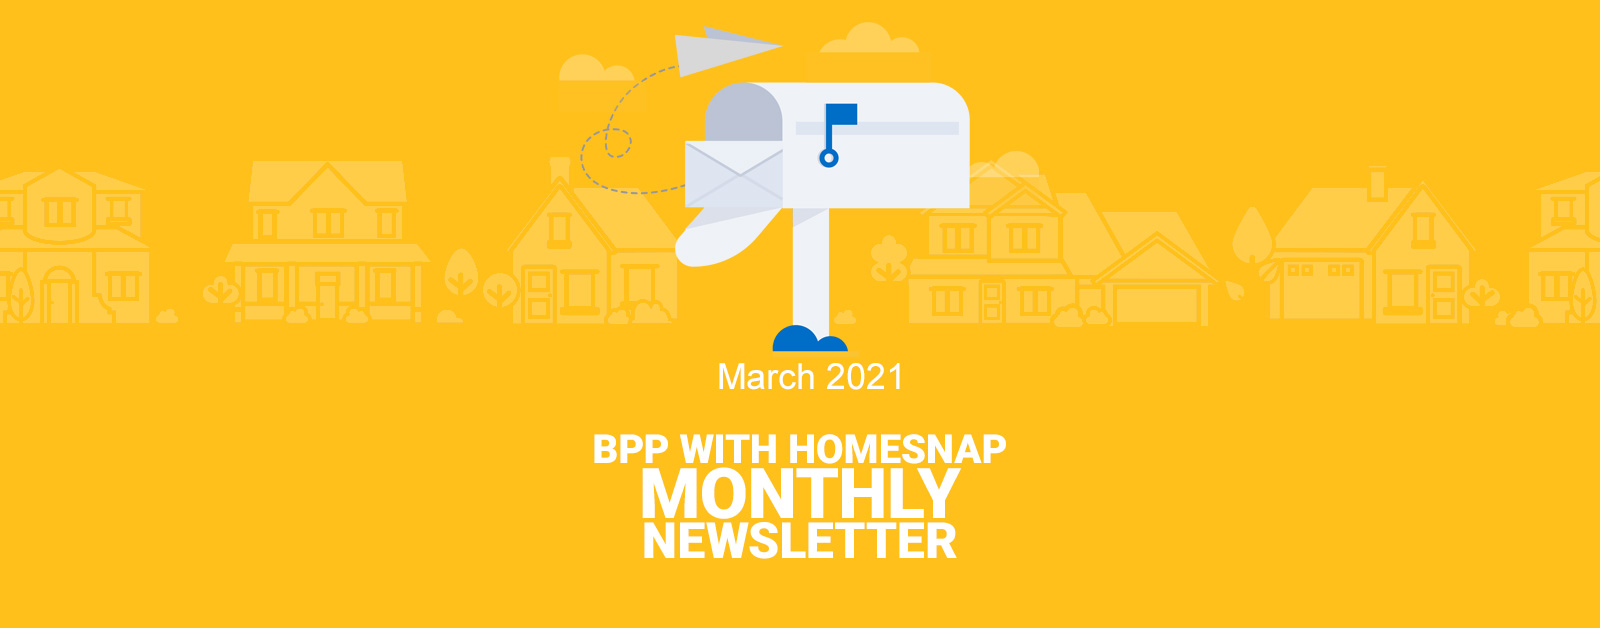 March 2021 BPP Newsletter